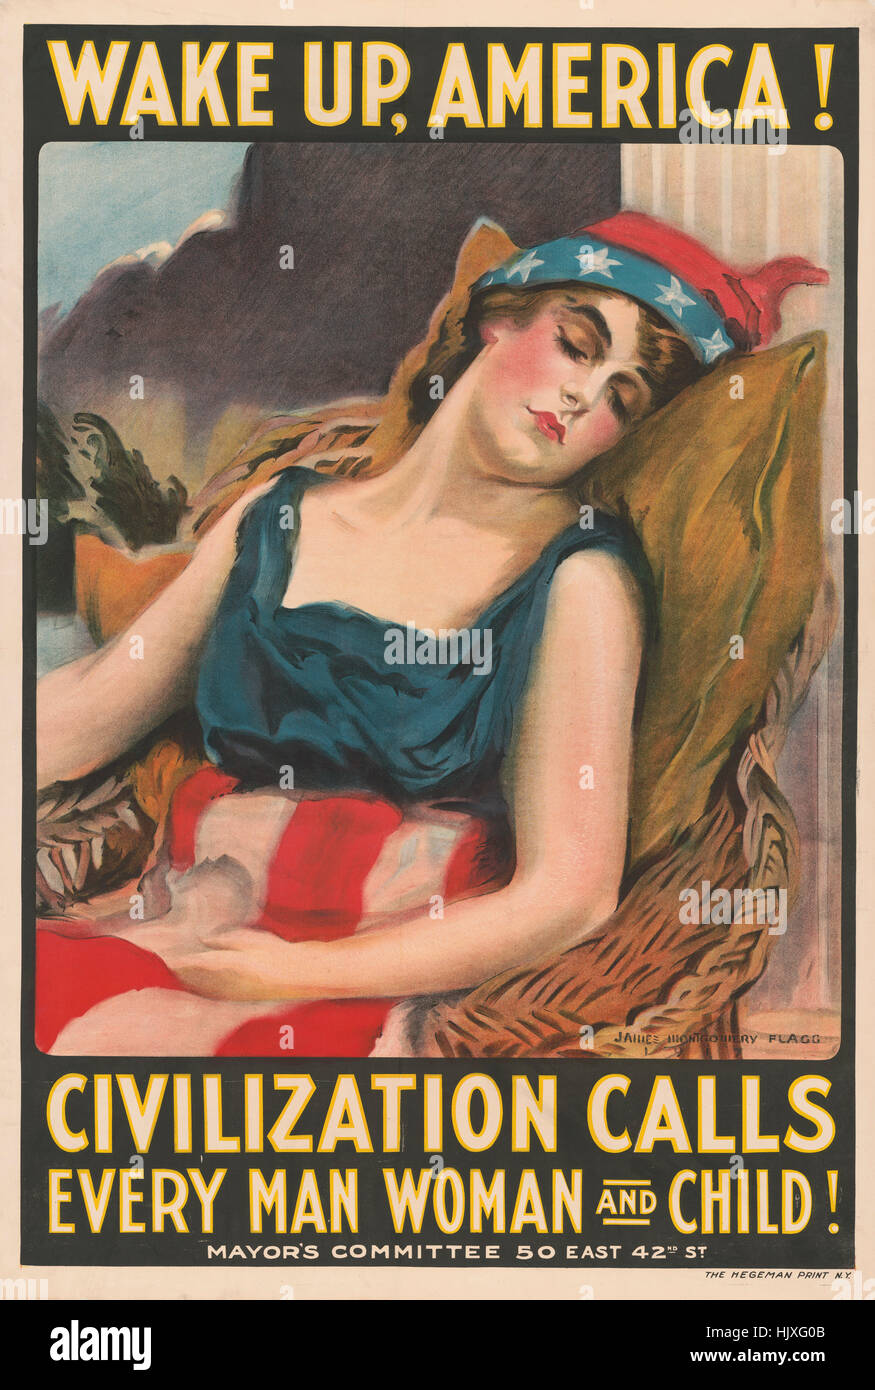 Portrait of Lady Liberty Sleeping, 'Wake Up America!, Civilization Calls Every Man, Woman and Child!', World War I Recruitment Poster, by James Montgomery Flagg, USA, 1917 Stock Photo